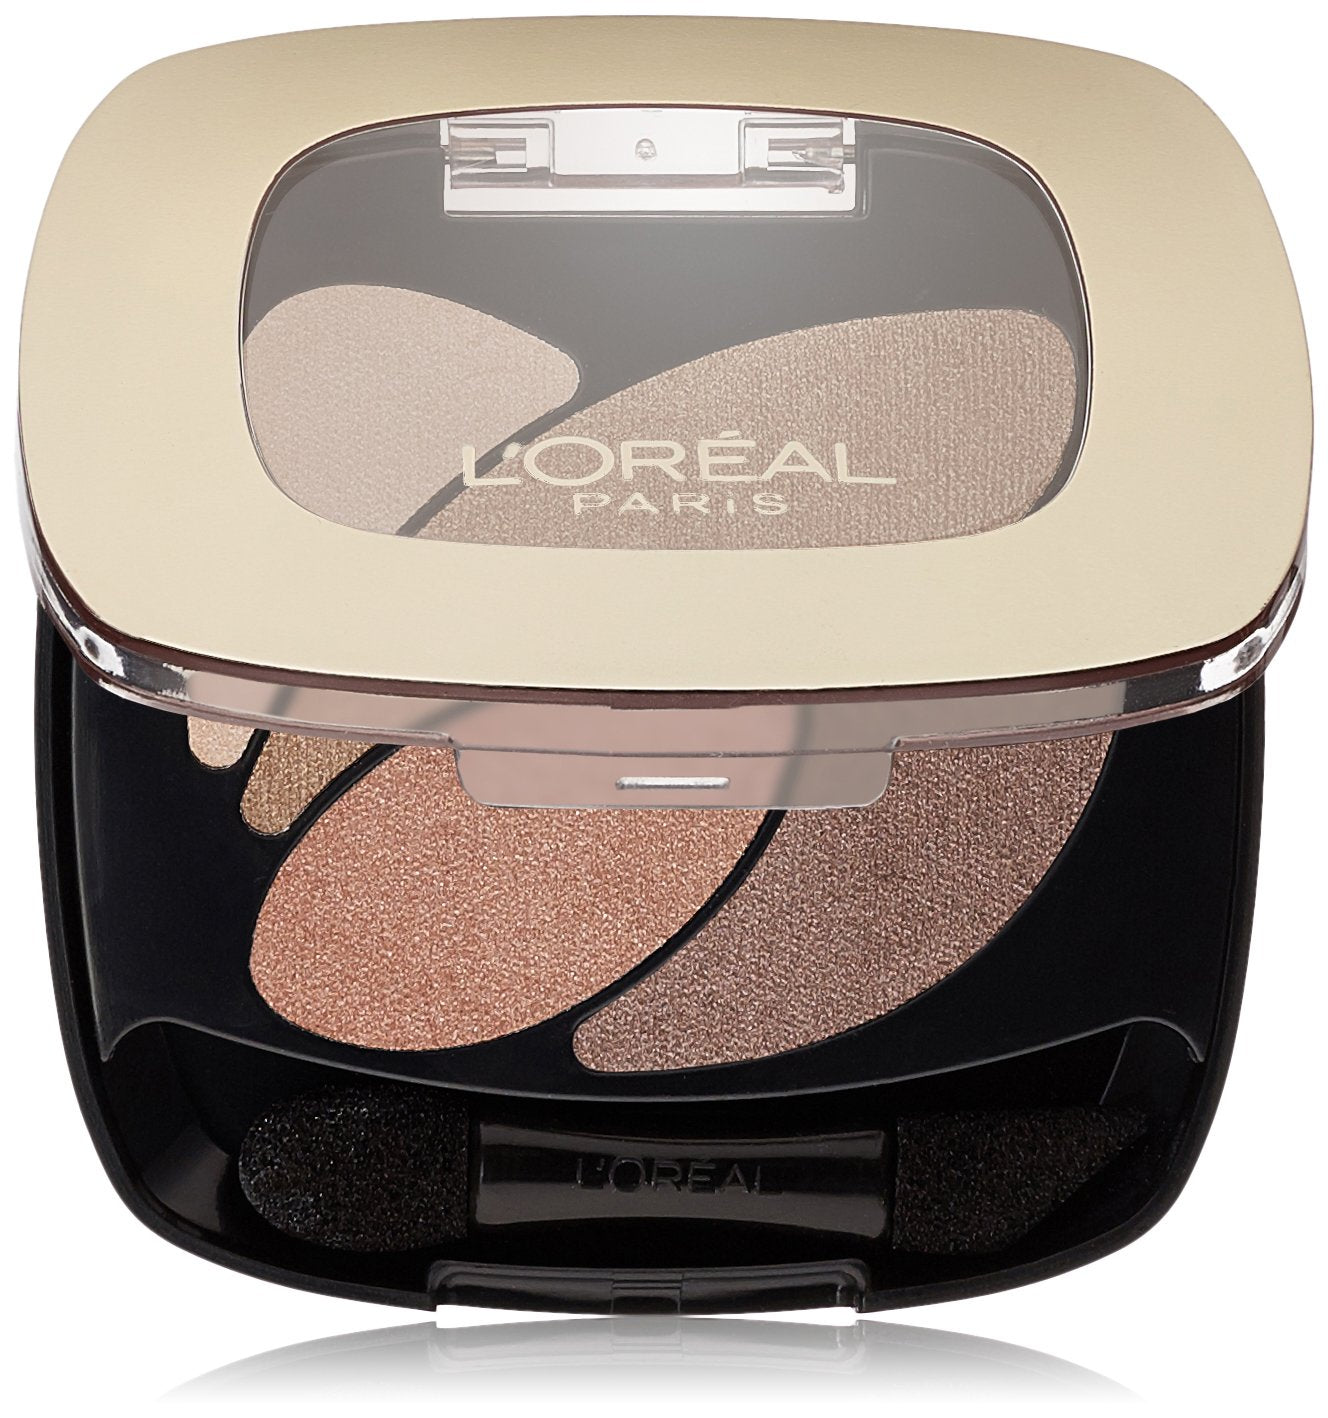 L'Oréal Paris Colour Riche Dual Effects Eye Shadow, Perpetual Nude, 0.12